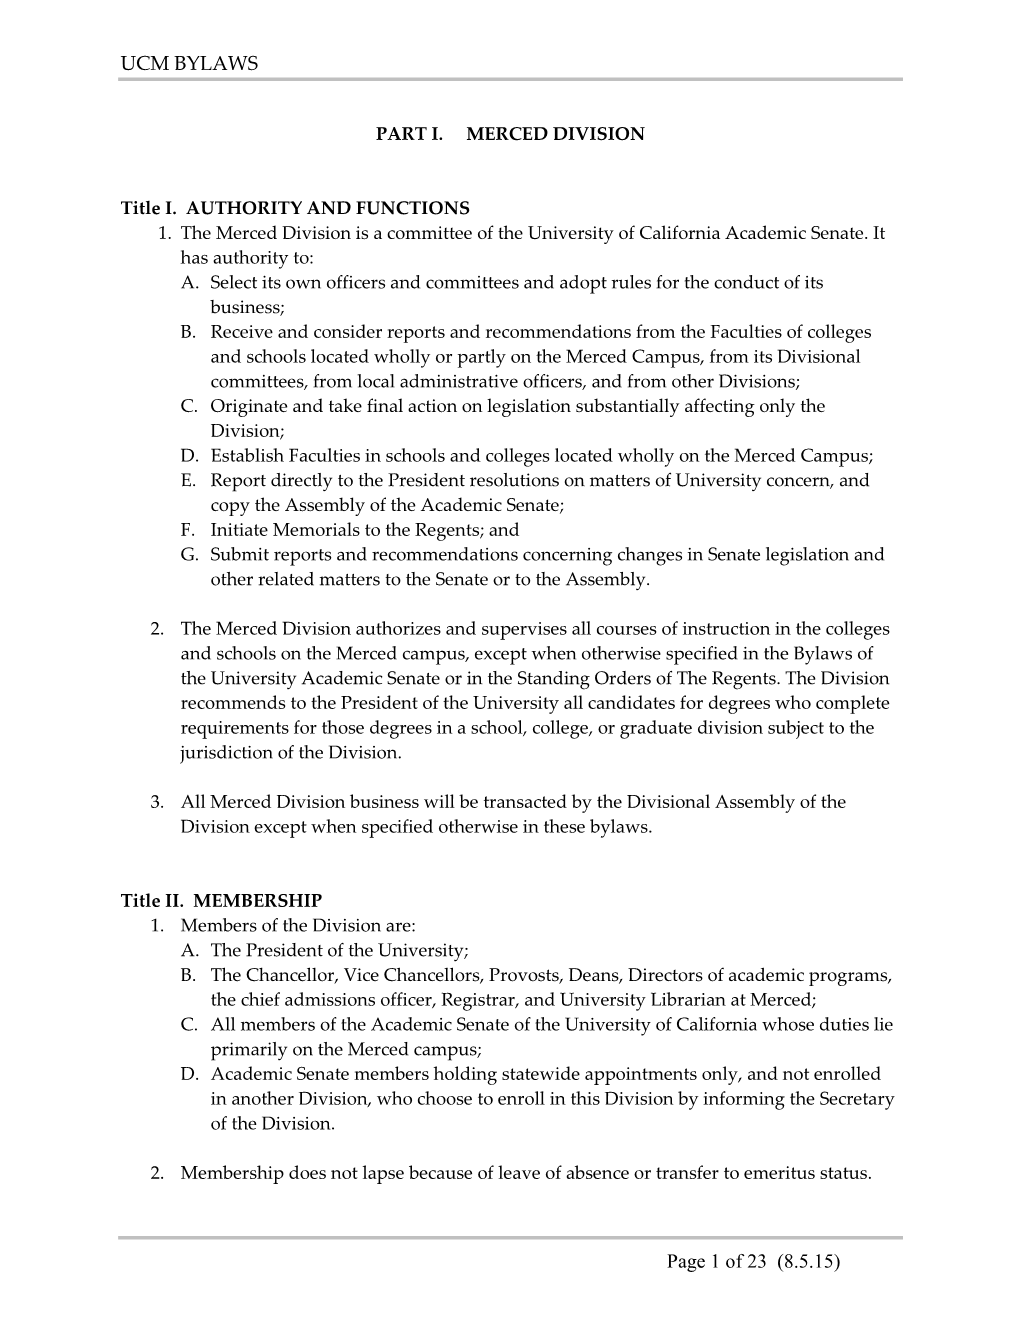 University of California, Merced- Academic Senate Bylaws